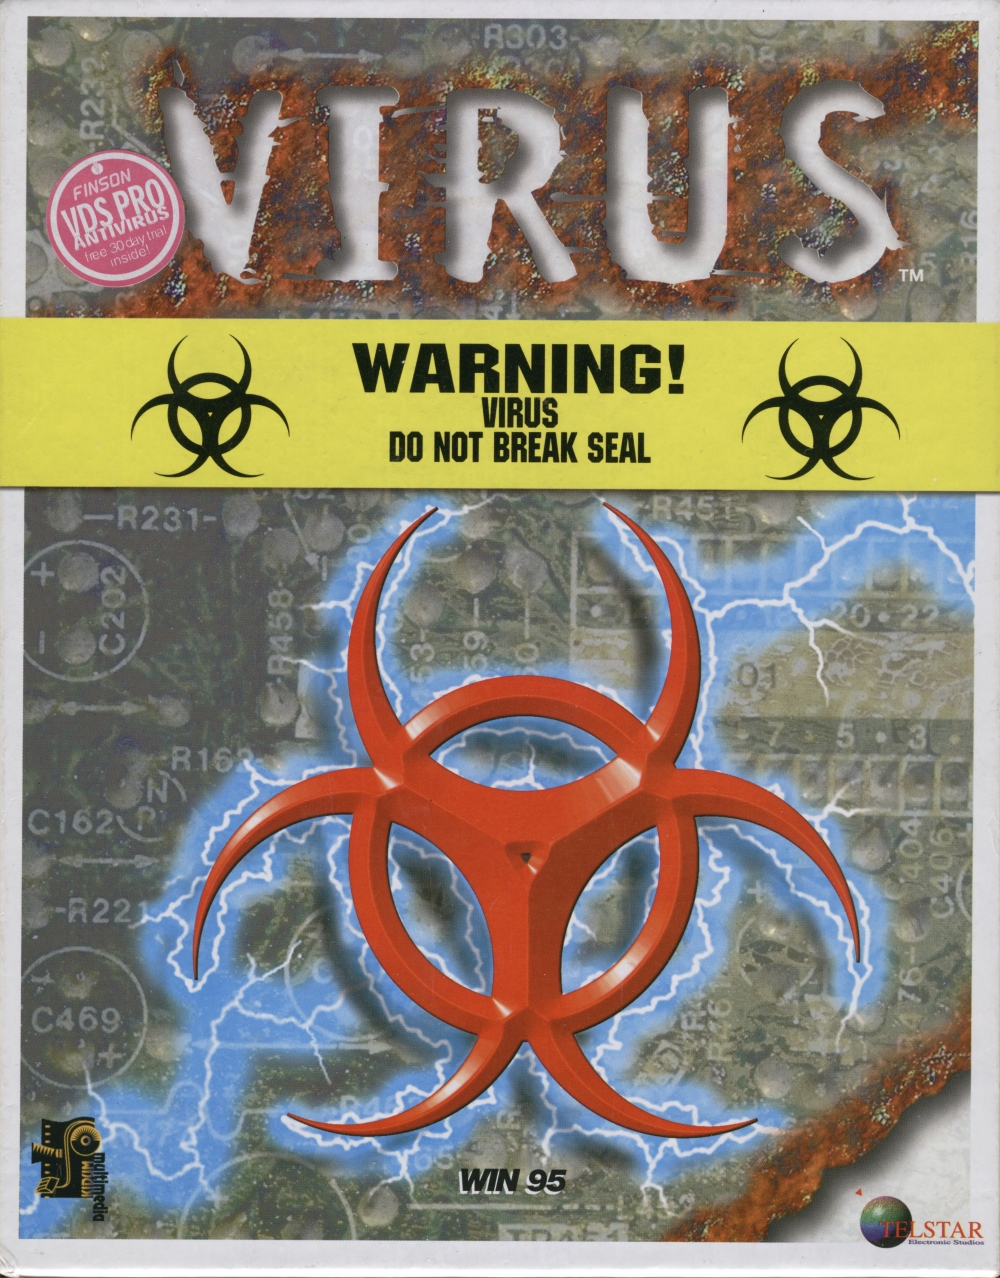 The virus game на русском